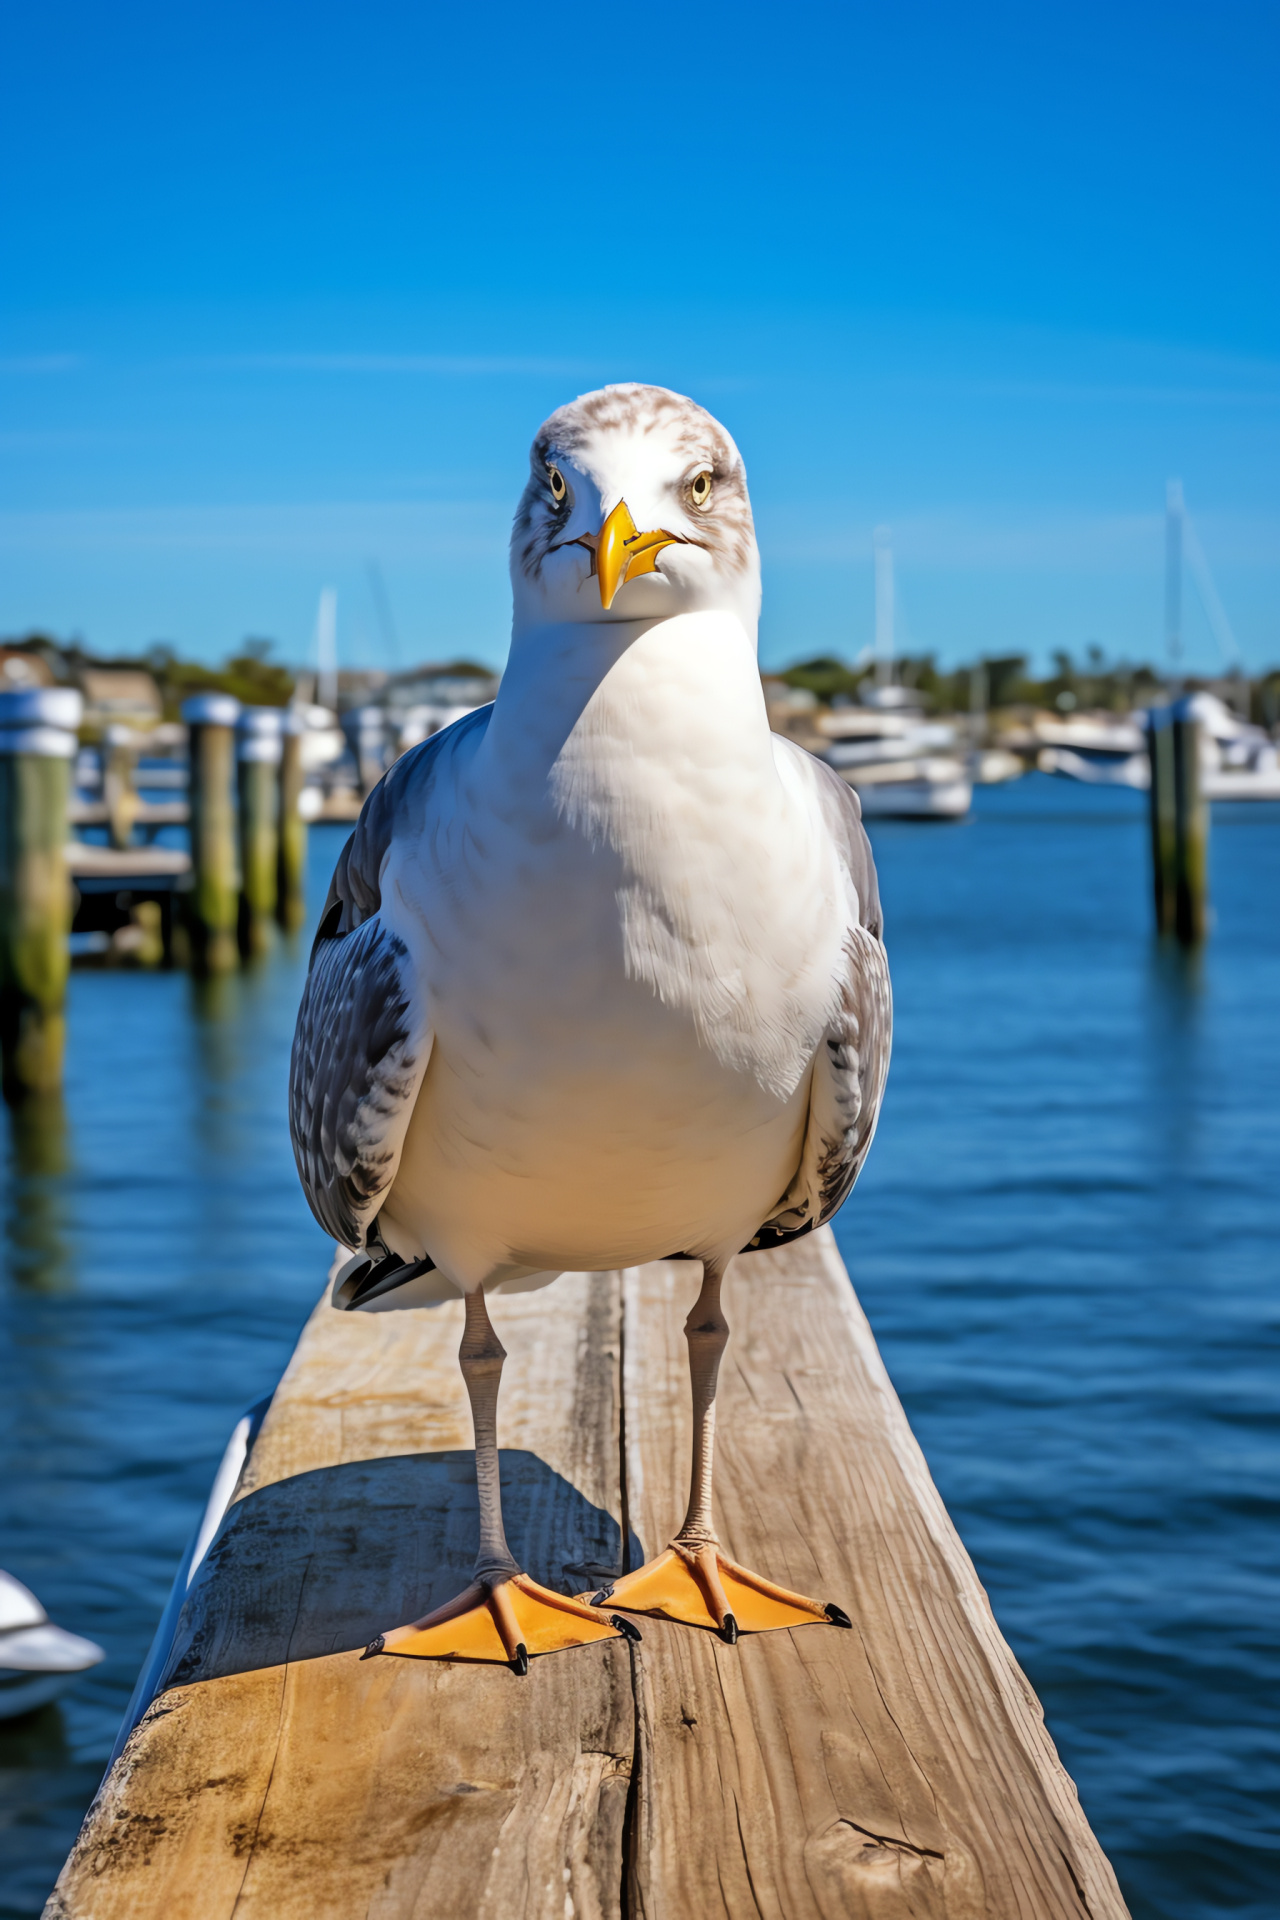 Seagull coastal life, Feathered scavenger, Seaside avian, Port town birds, Dockside wildlife, HD Phone Image